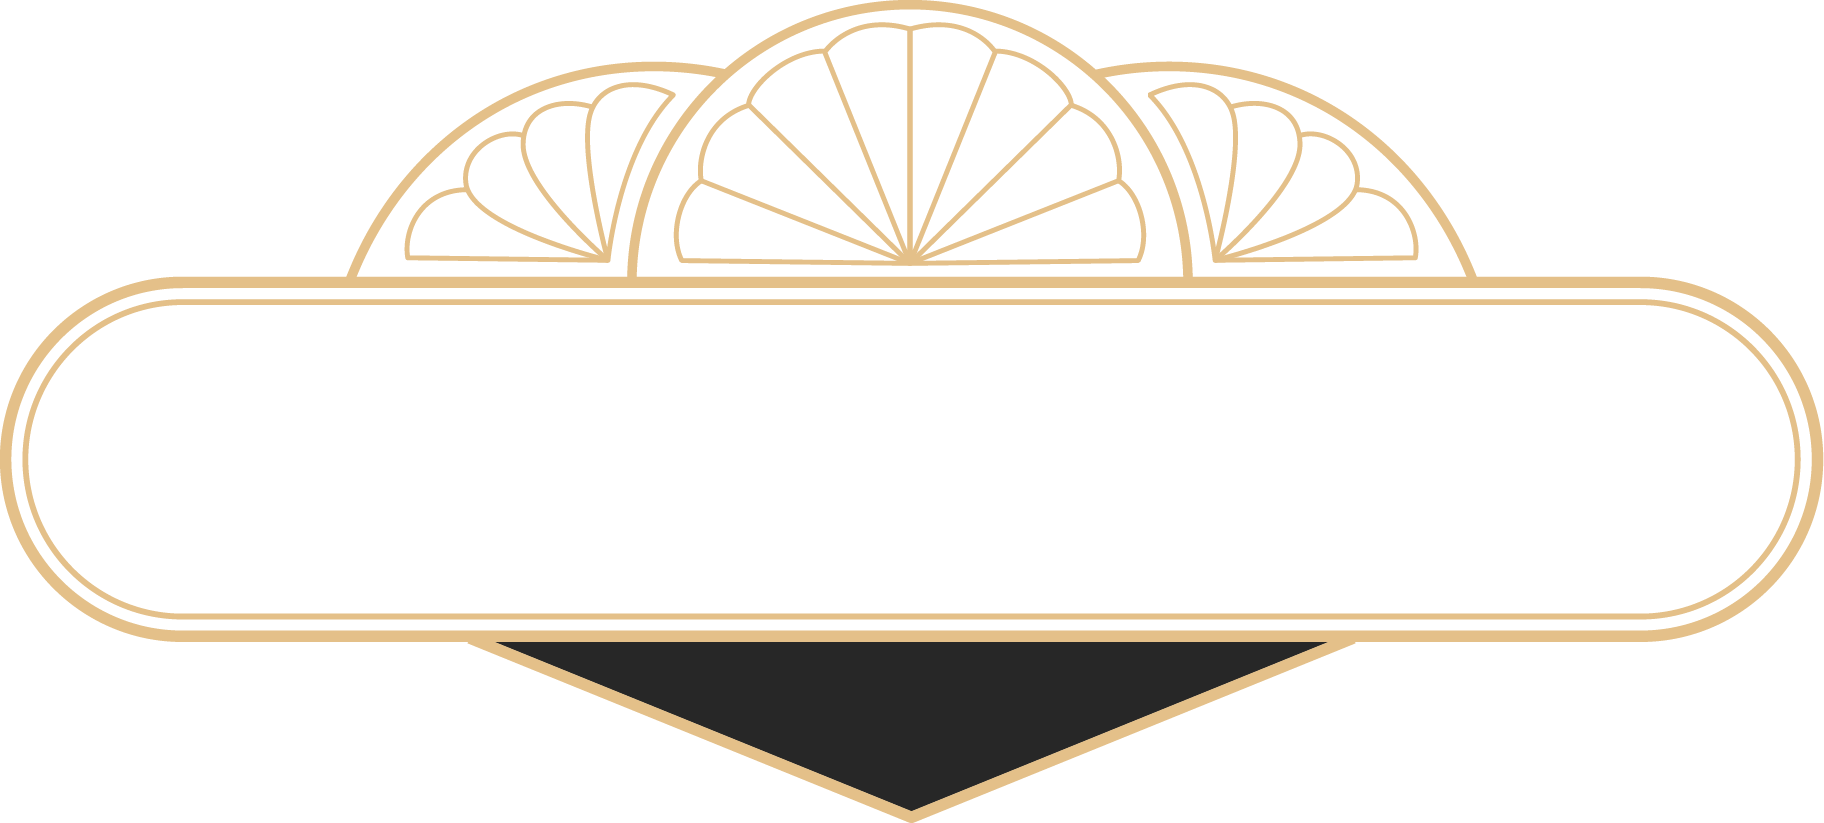 Nordic Noir